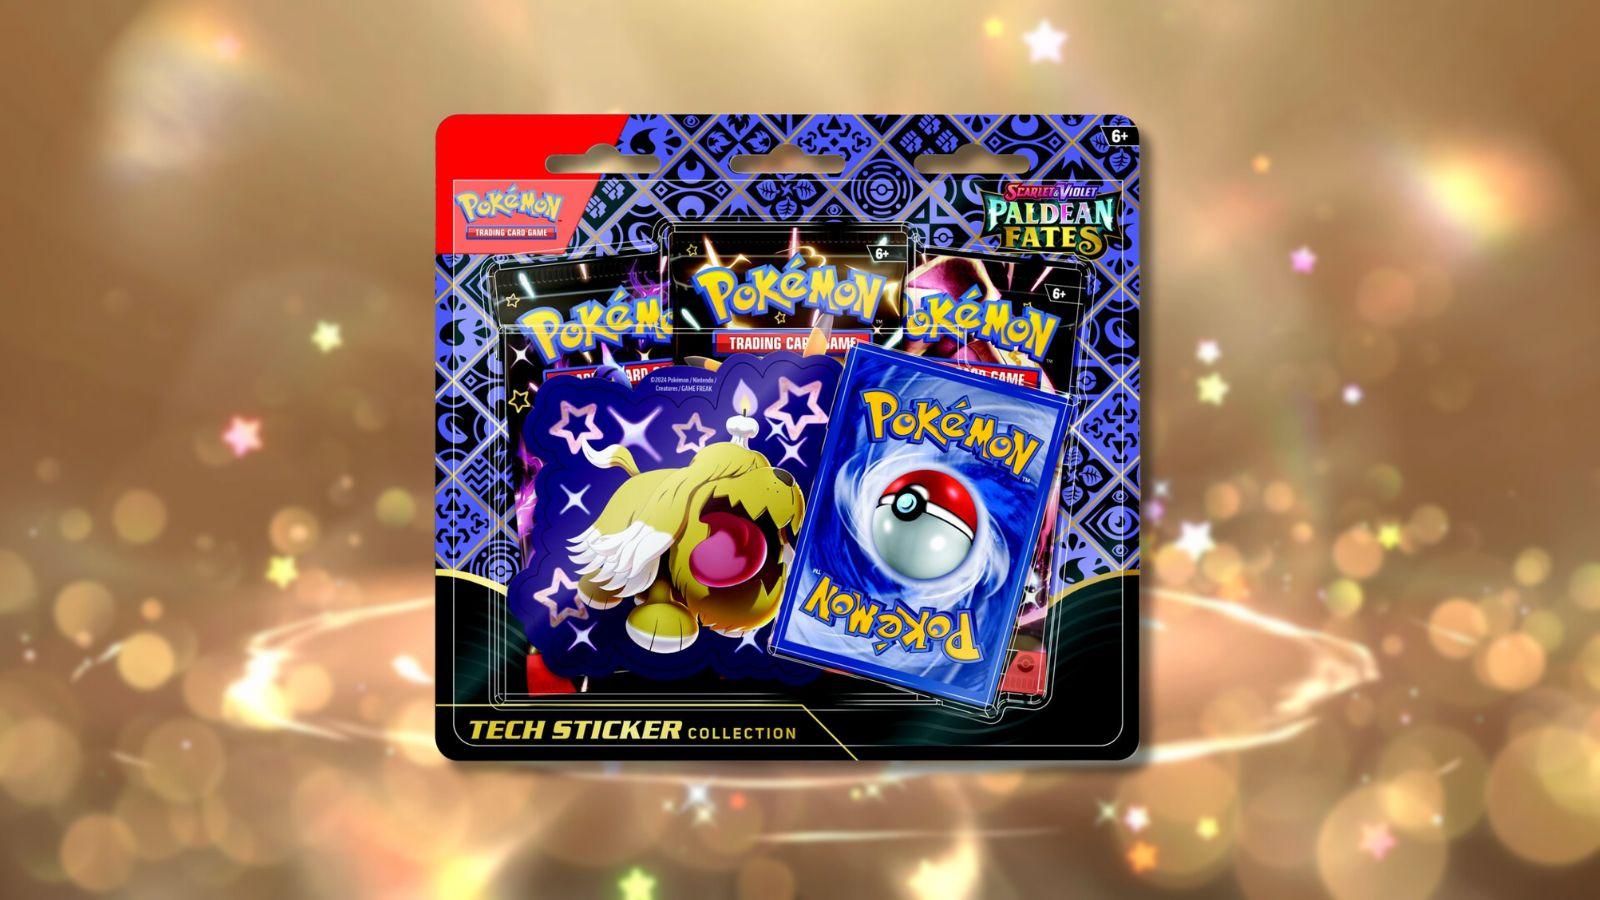 Pokemon TCG tech sticker gift background